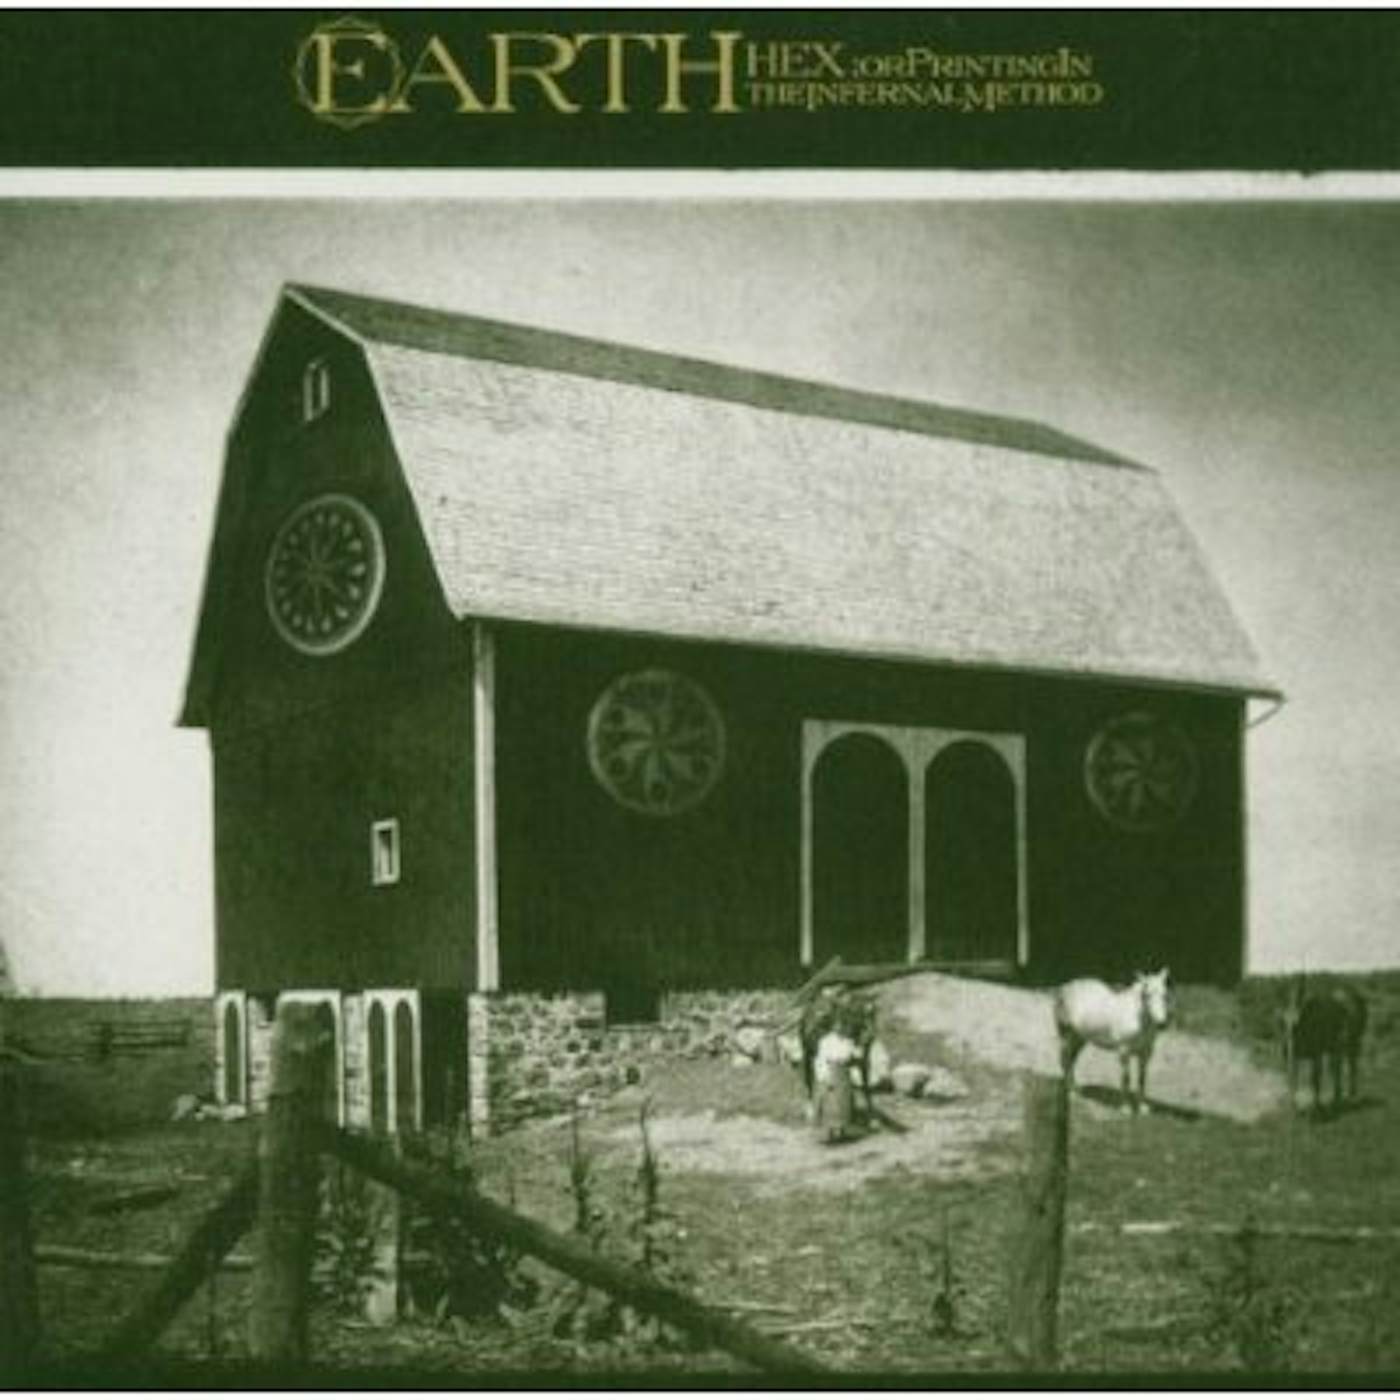 Earth HEX: OR PRINTING IN THE INFERNAL METHOD CD